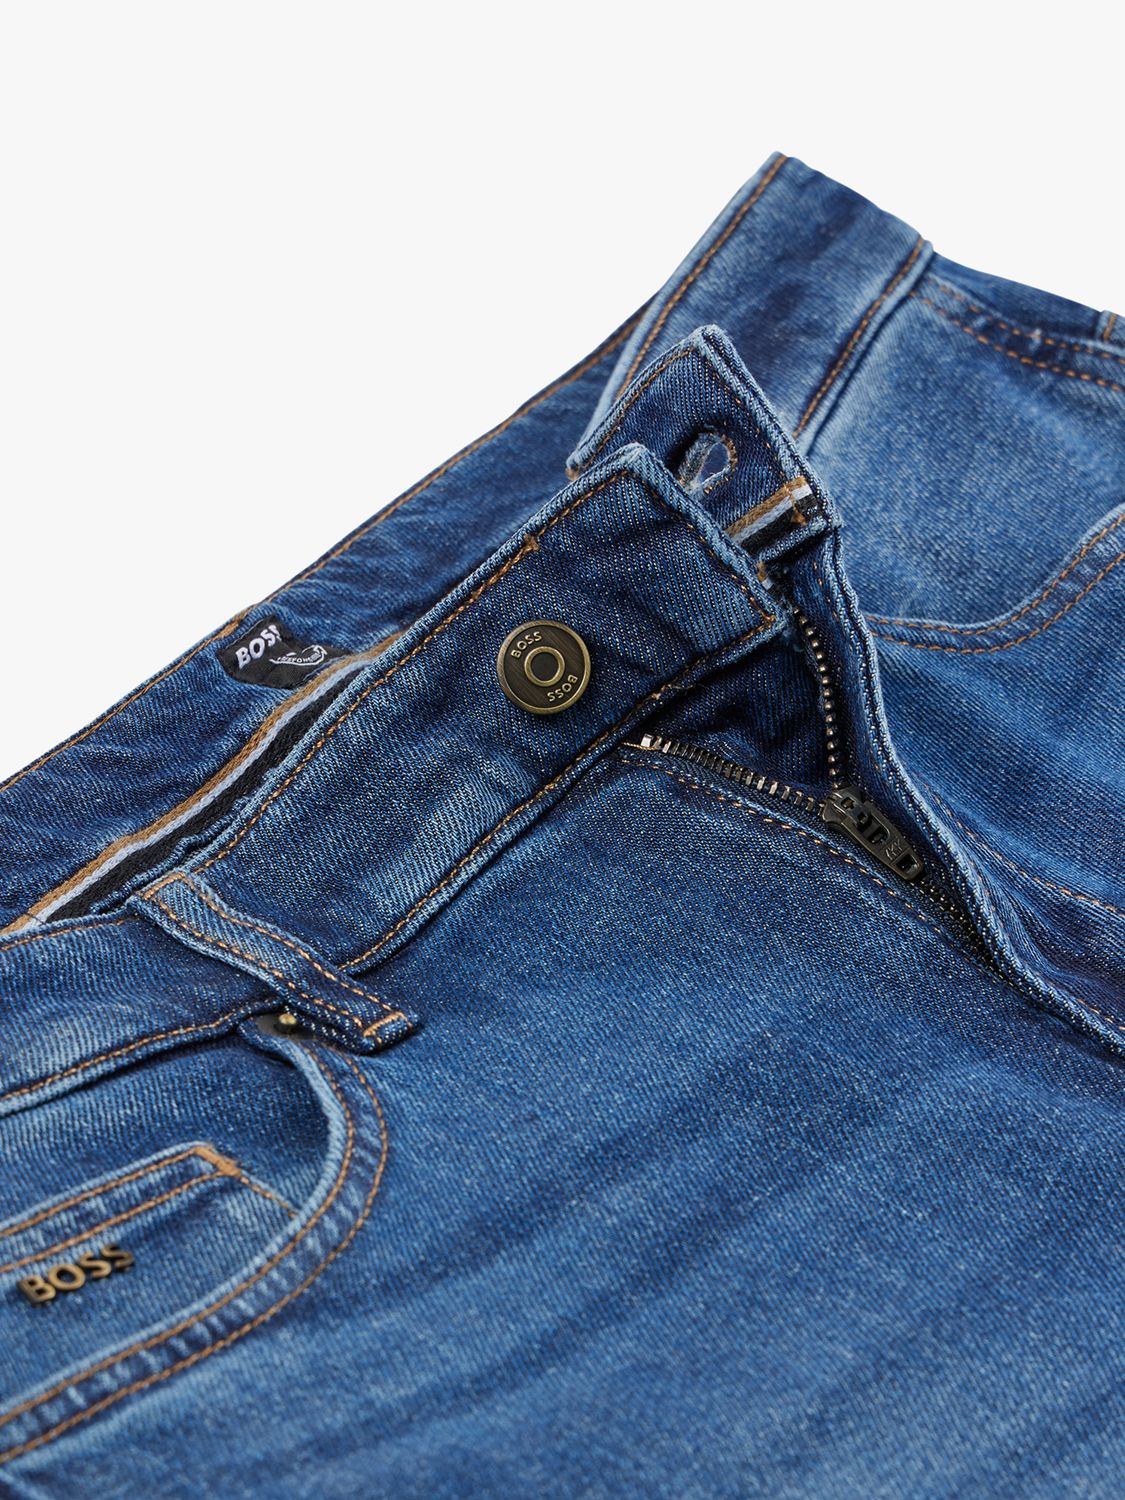 HUGO BOSS Delaware Slim Fit Jeans, Navy, 30R